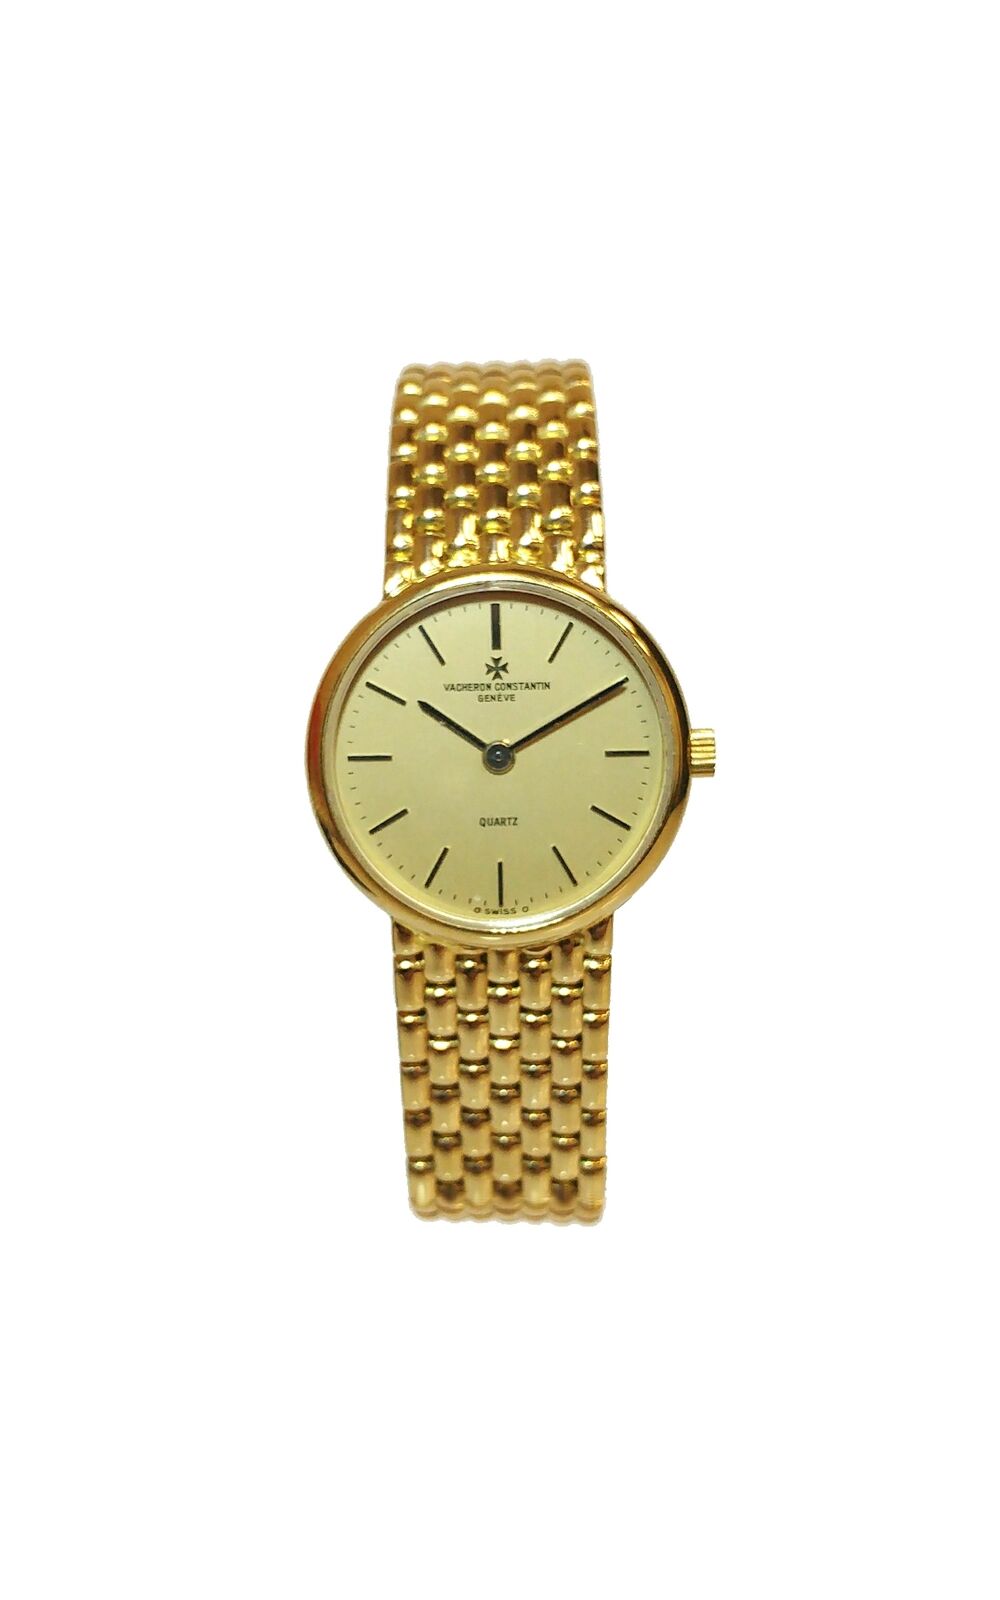 60002/554611 Vacheron Constantin / Lady Classic / Horloge Femme/Cadran